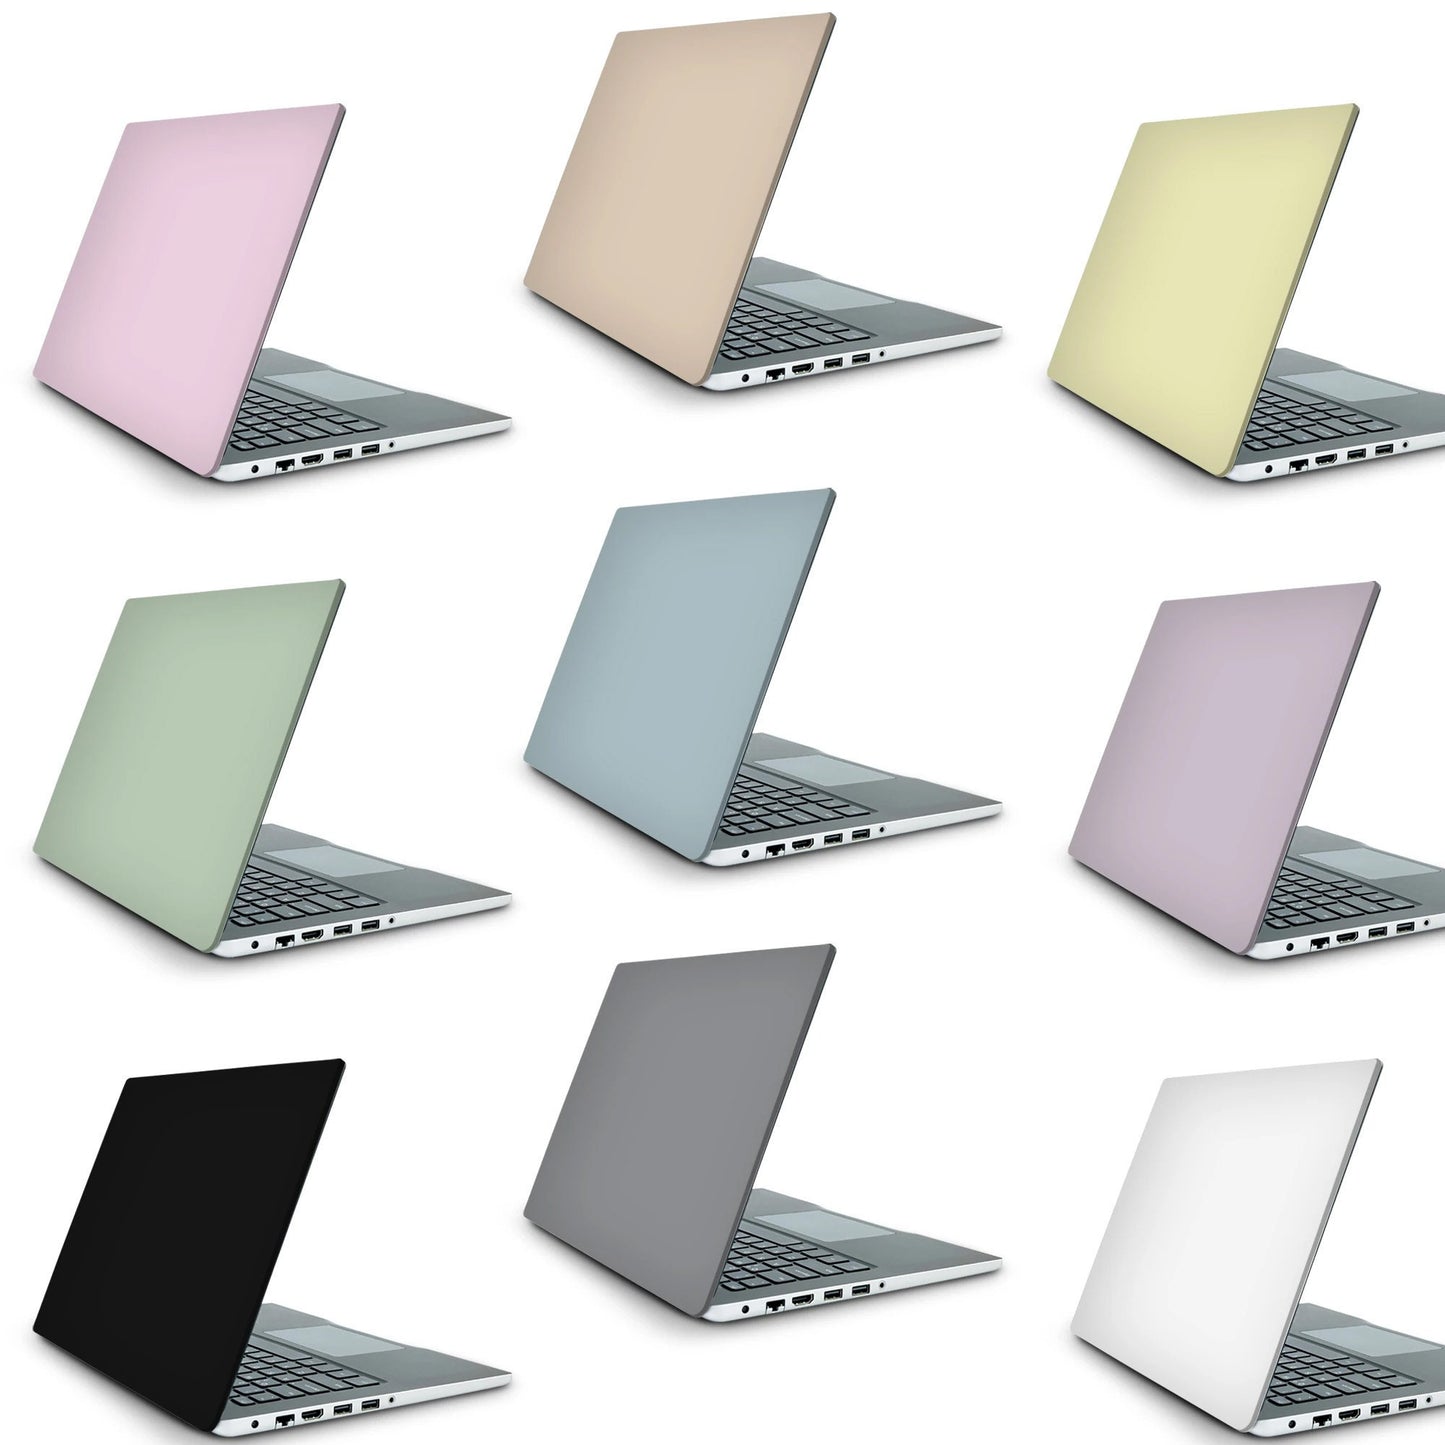 Tropical Laptop Skin, Laptop Cover, Laptop Skins, Removable Laptop Skins, Laptop Decal, Customized Laptop Skin, Laptop Stickers 164